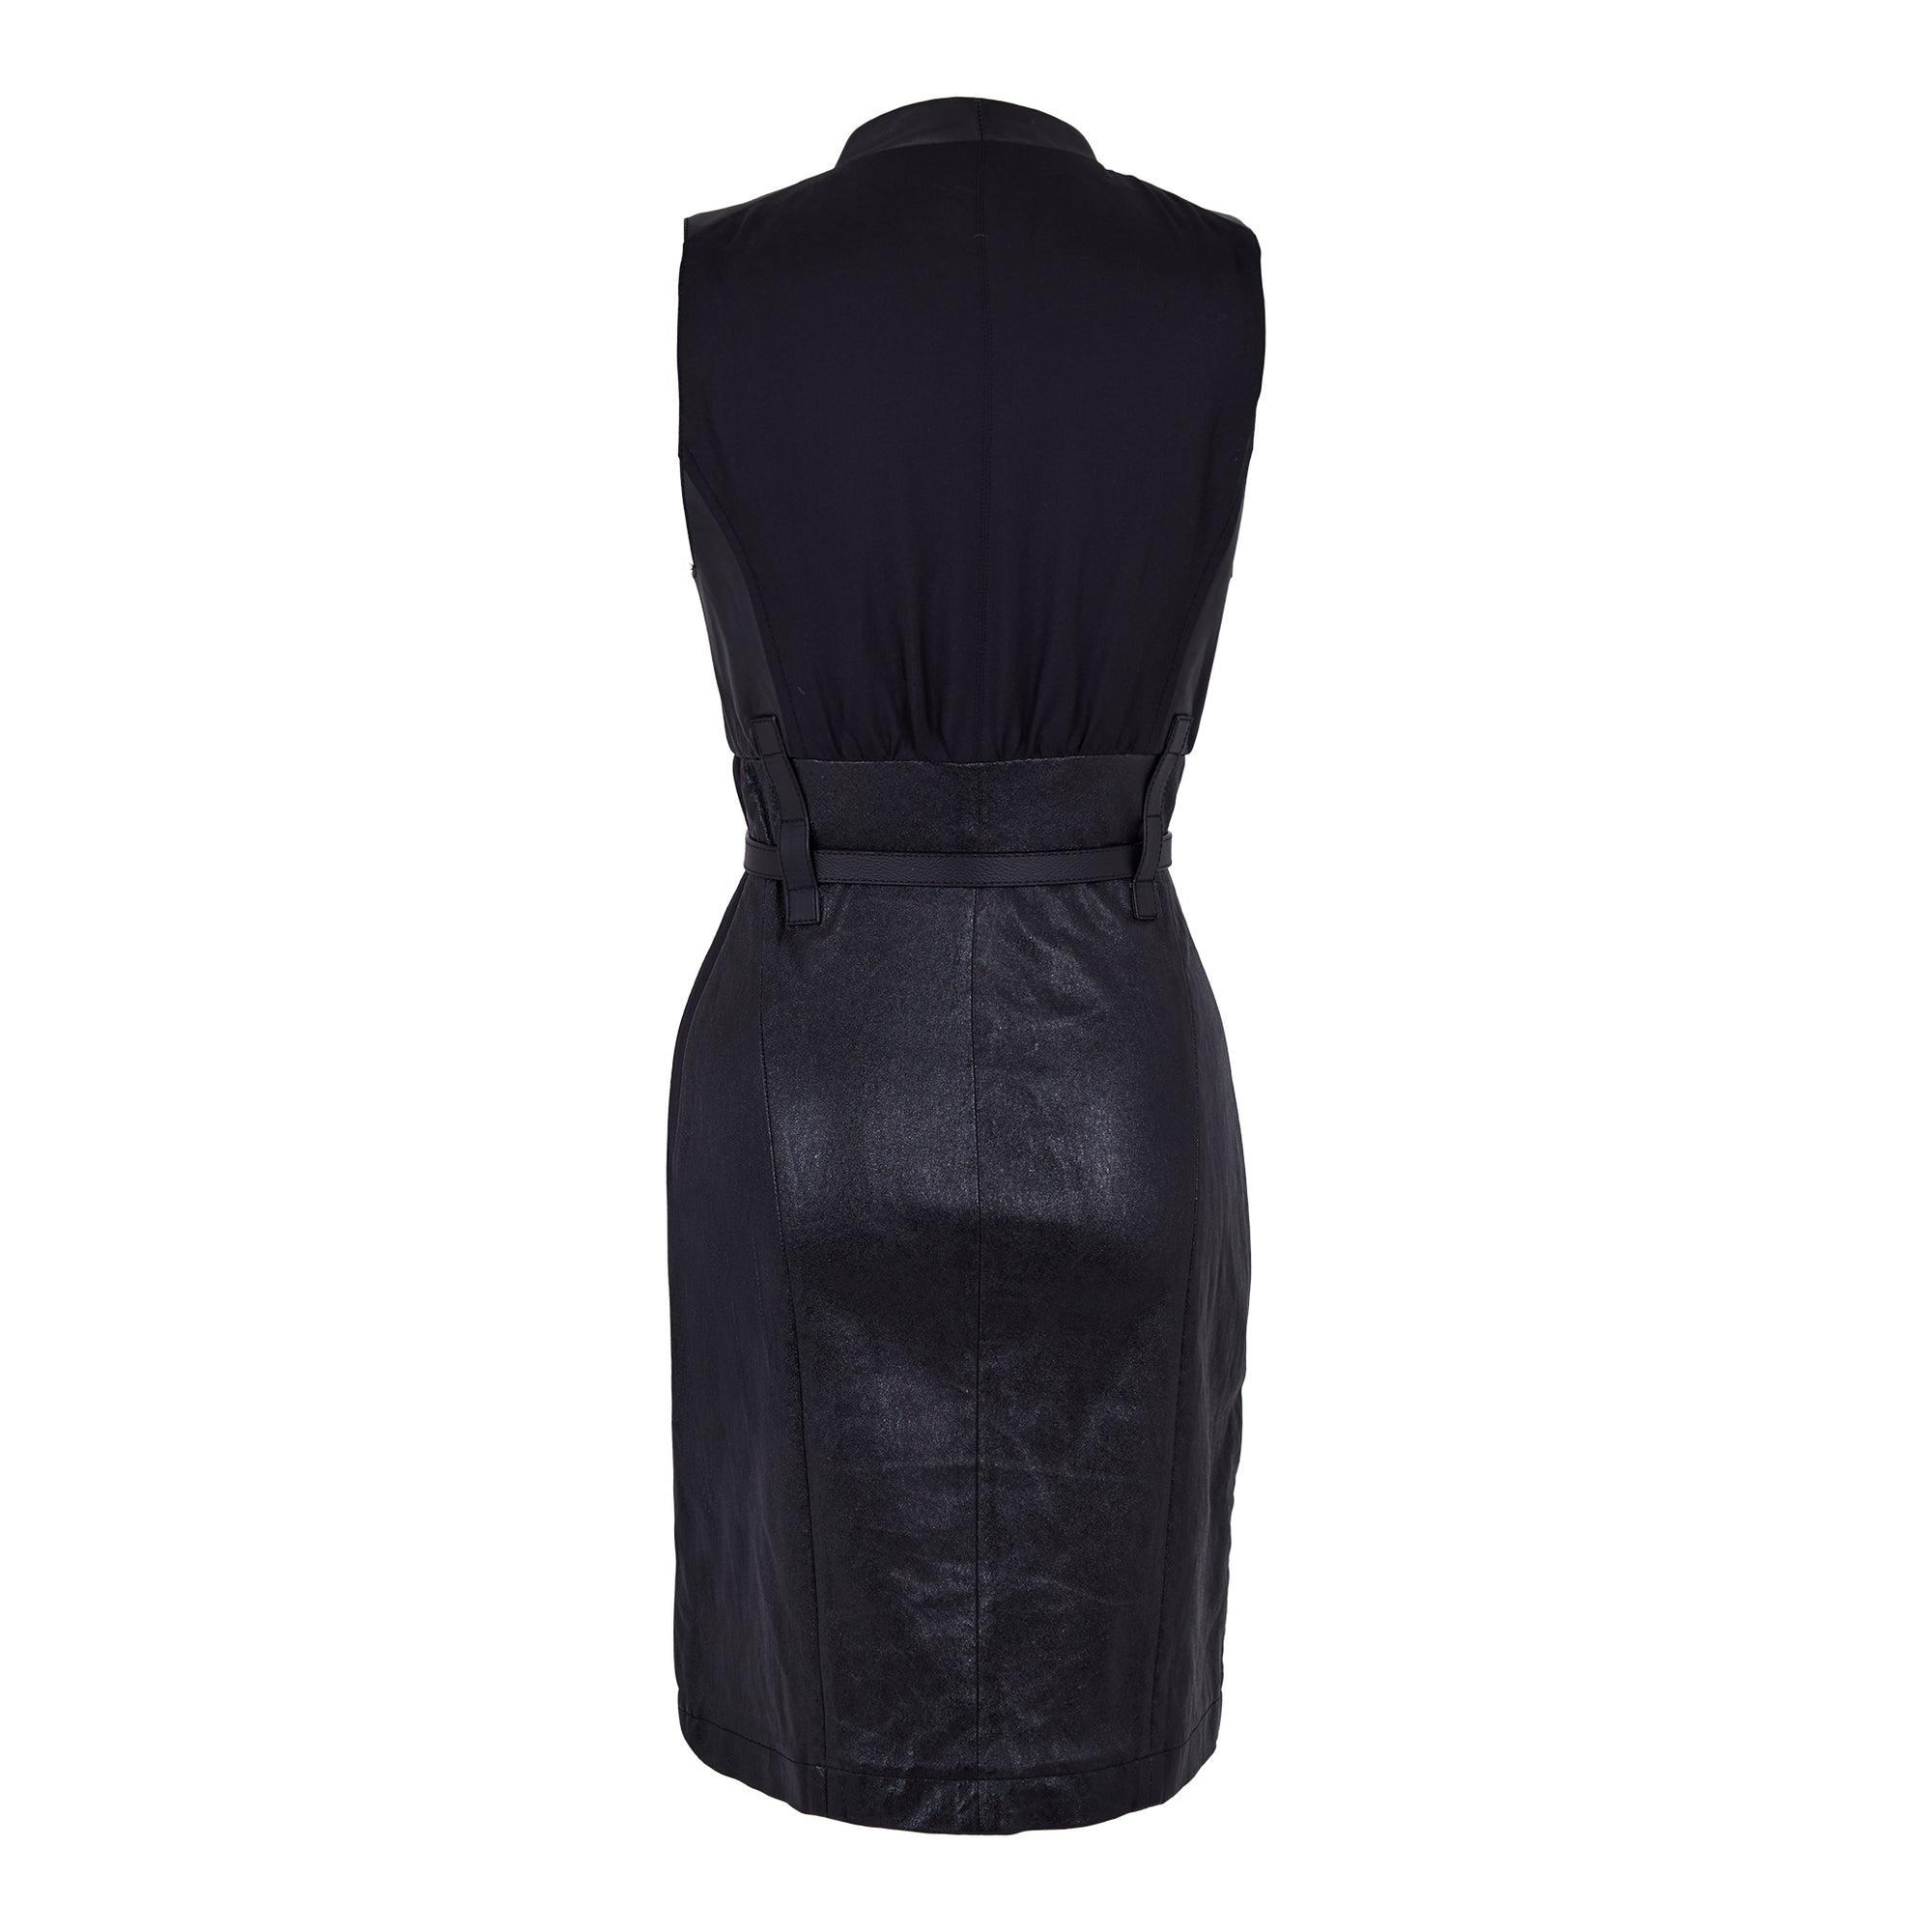 Louis Vuitton Tight black leather dress